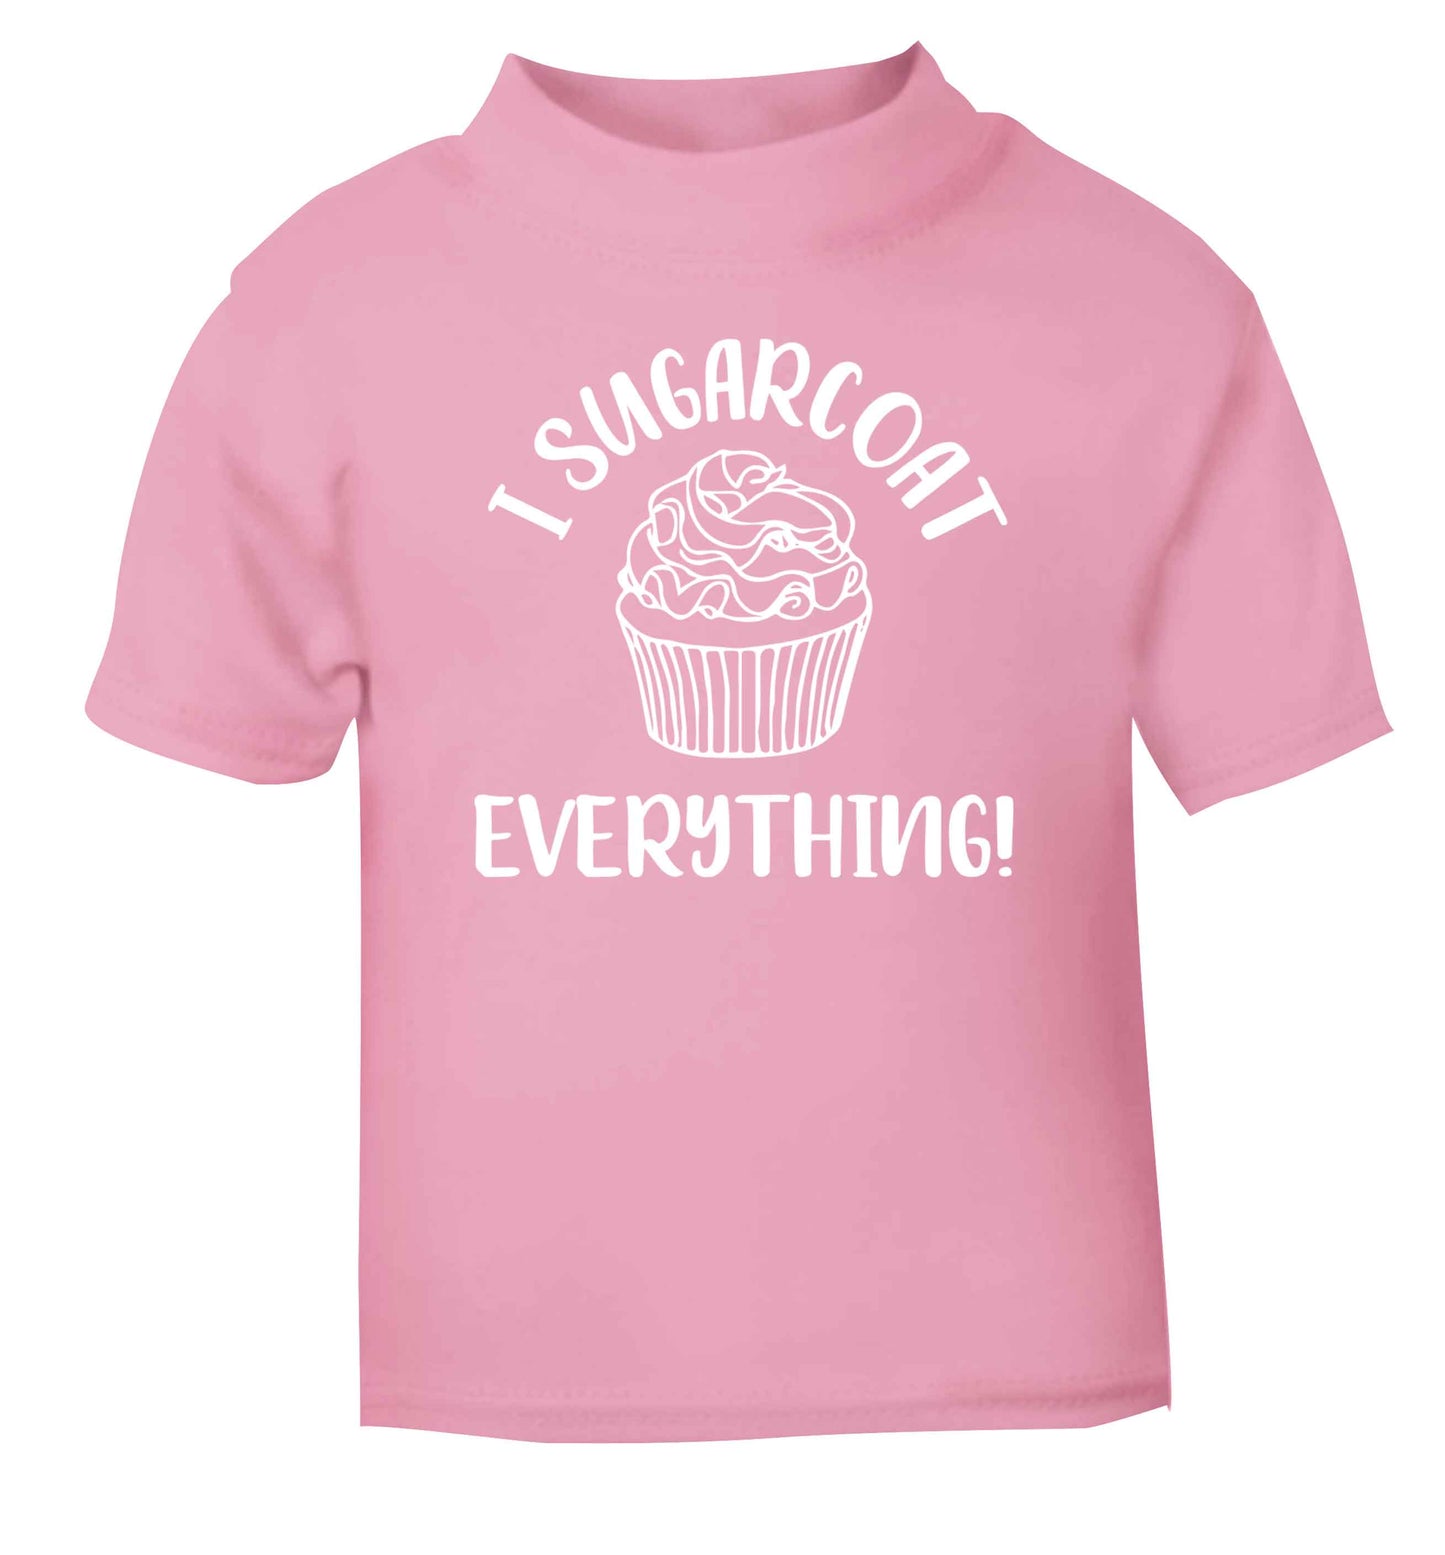 I sugarcoat everything light pink Baby Toddler Tshirt 2 Years